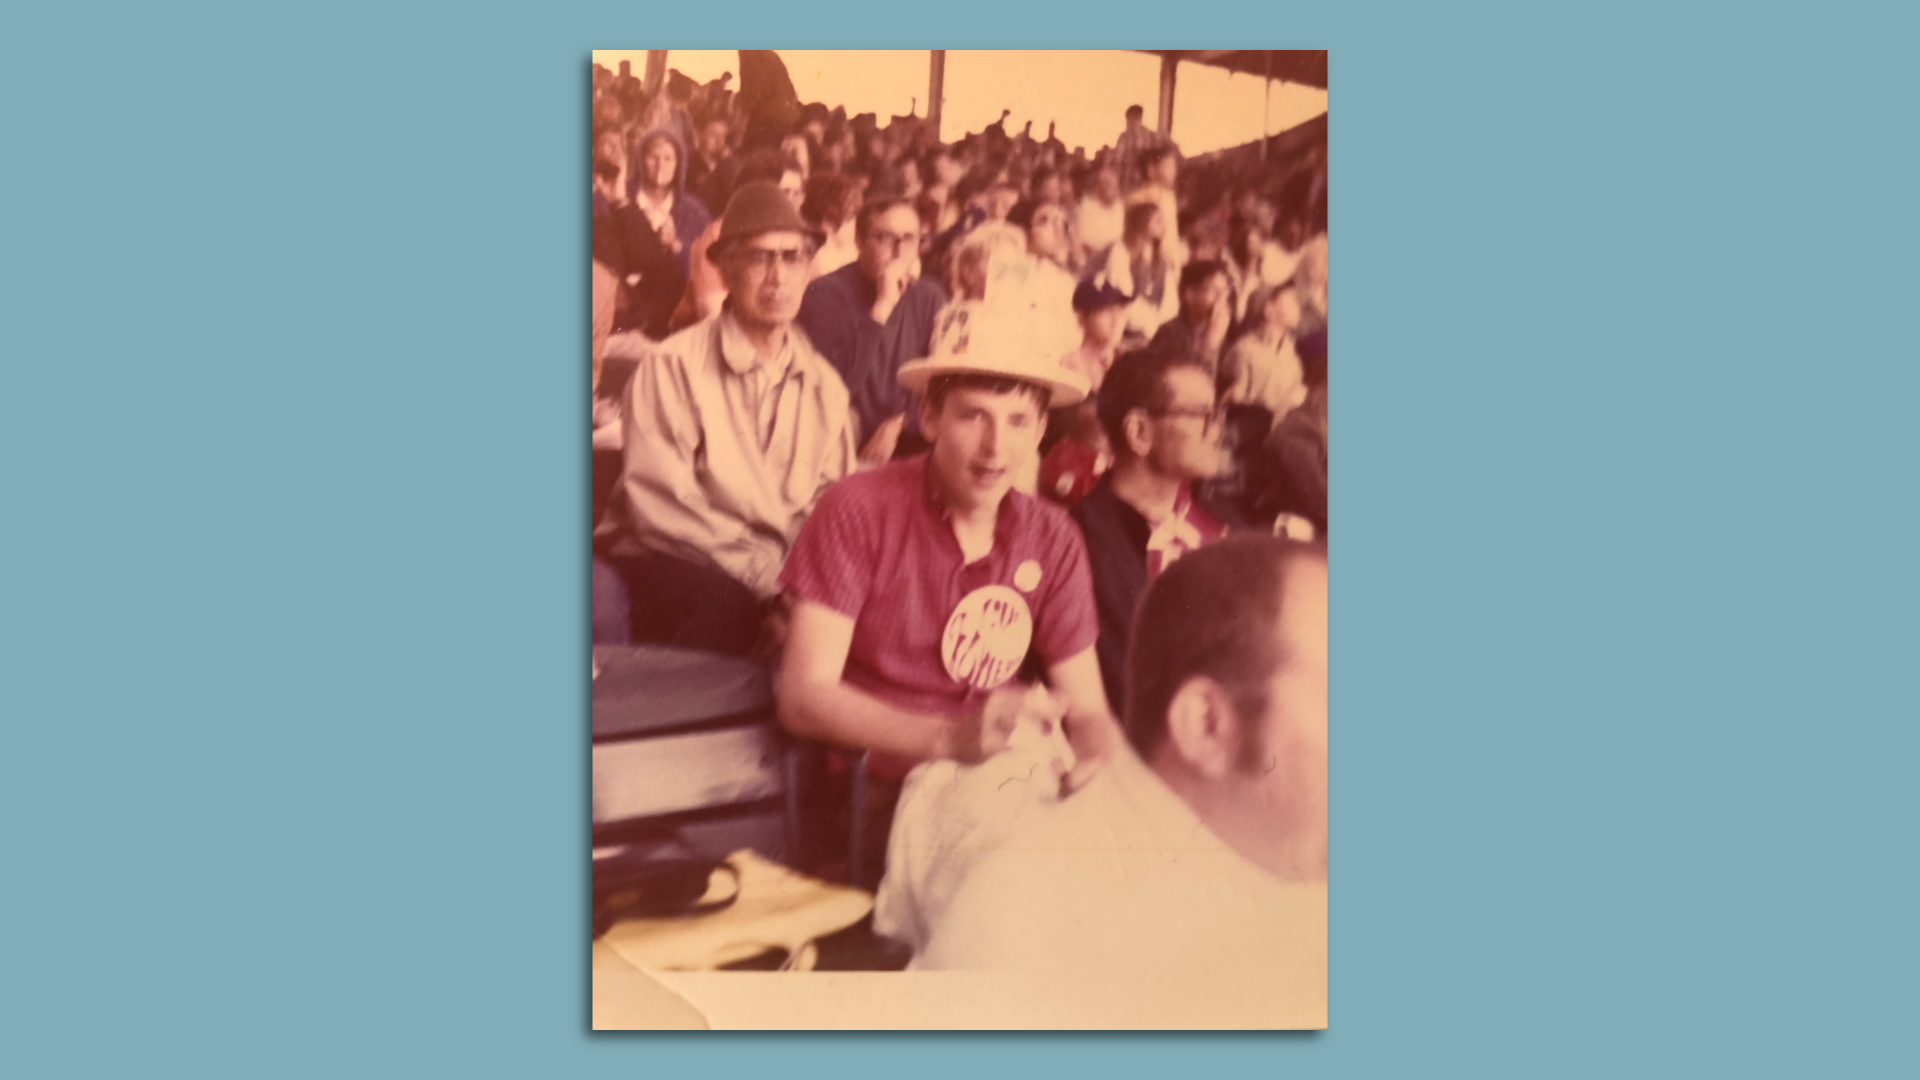 Photo of a boy at a baseball game 